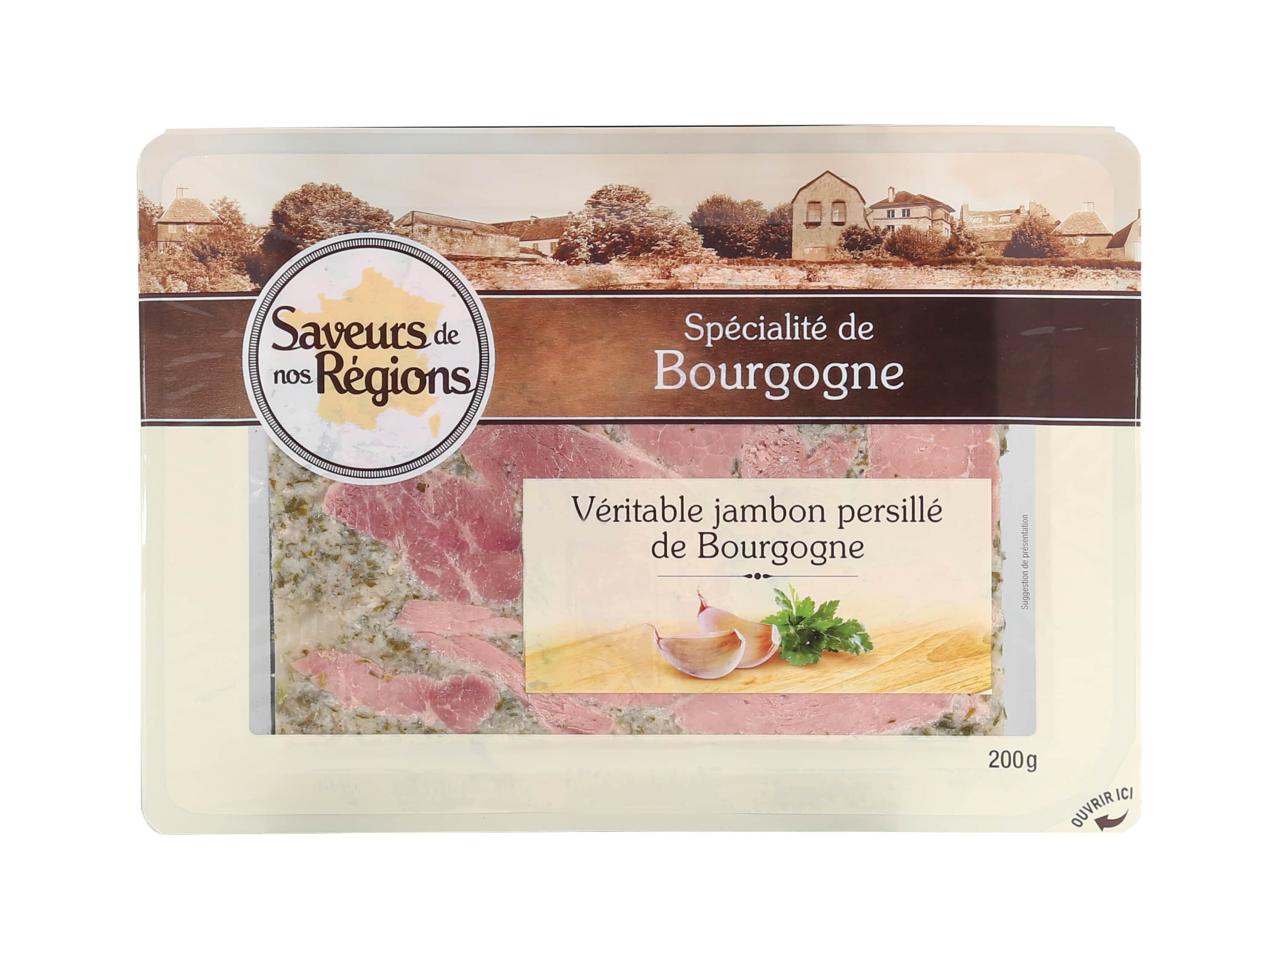 Véritable jambon persillé de Bourgogne1